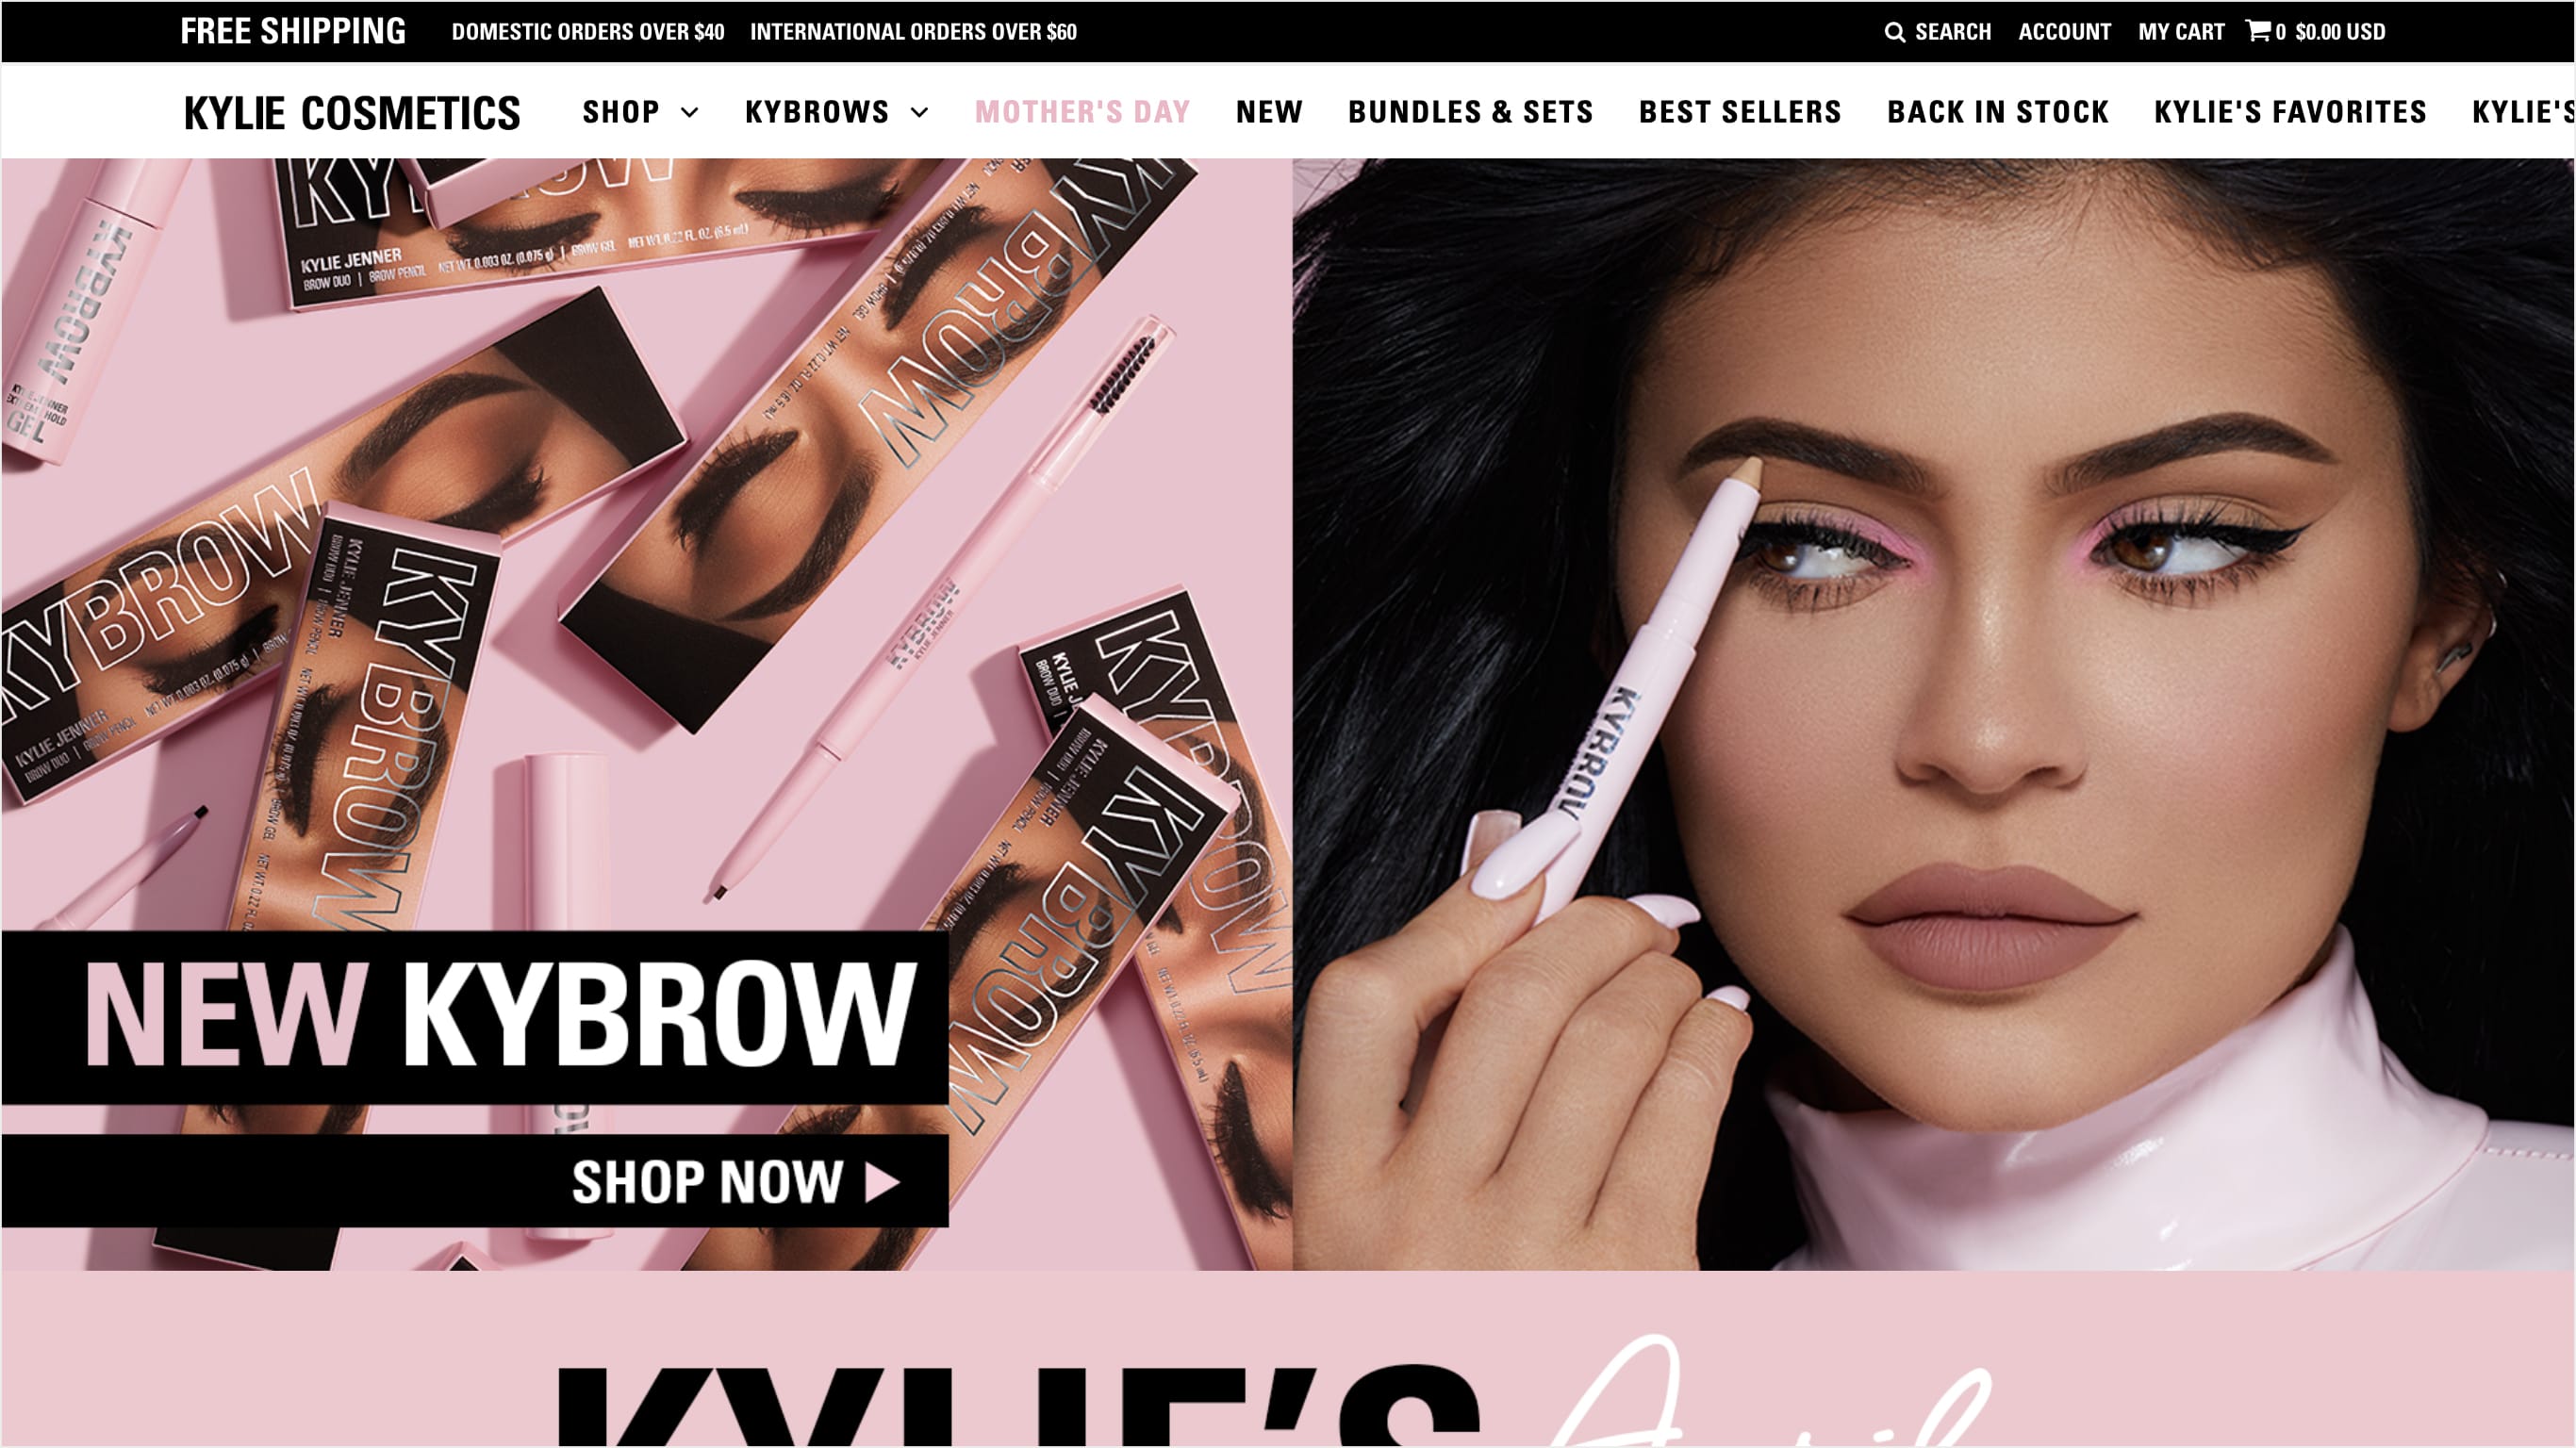 ROXO | Kylie Cosmetics Shopify Site